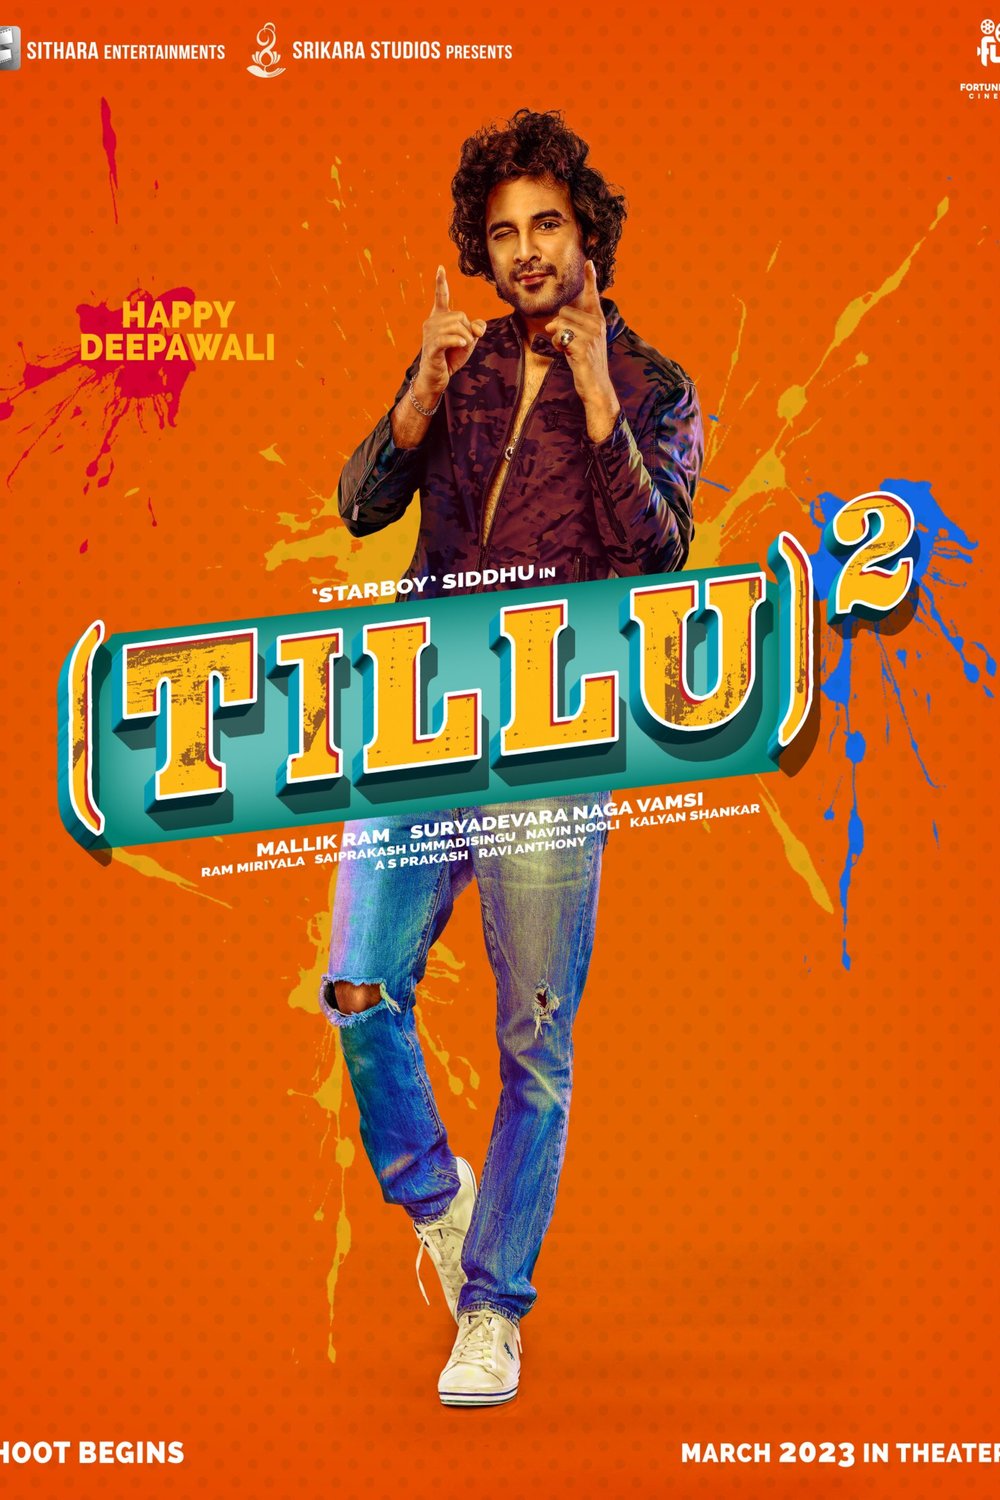 L'affiche originale du film Tillu Square en Telugu